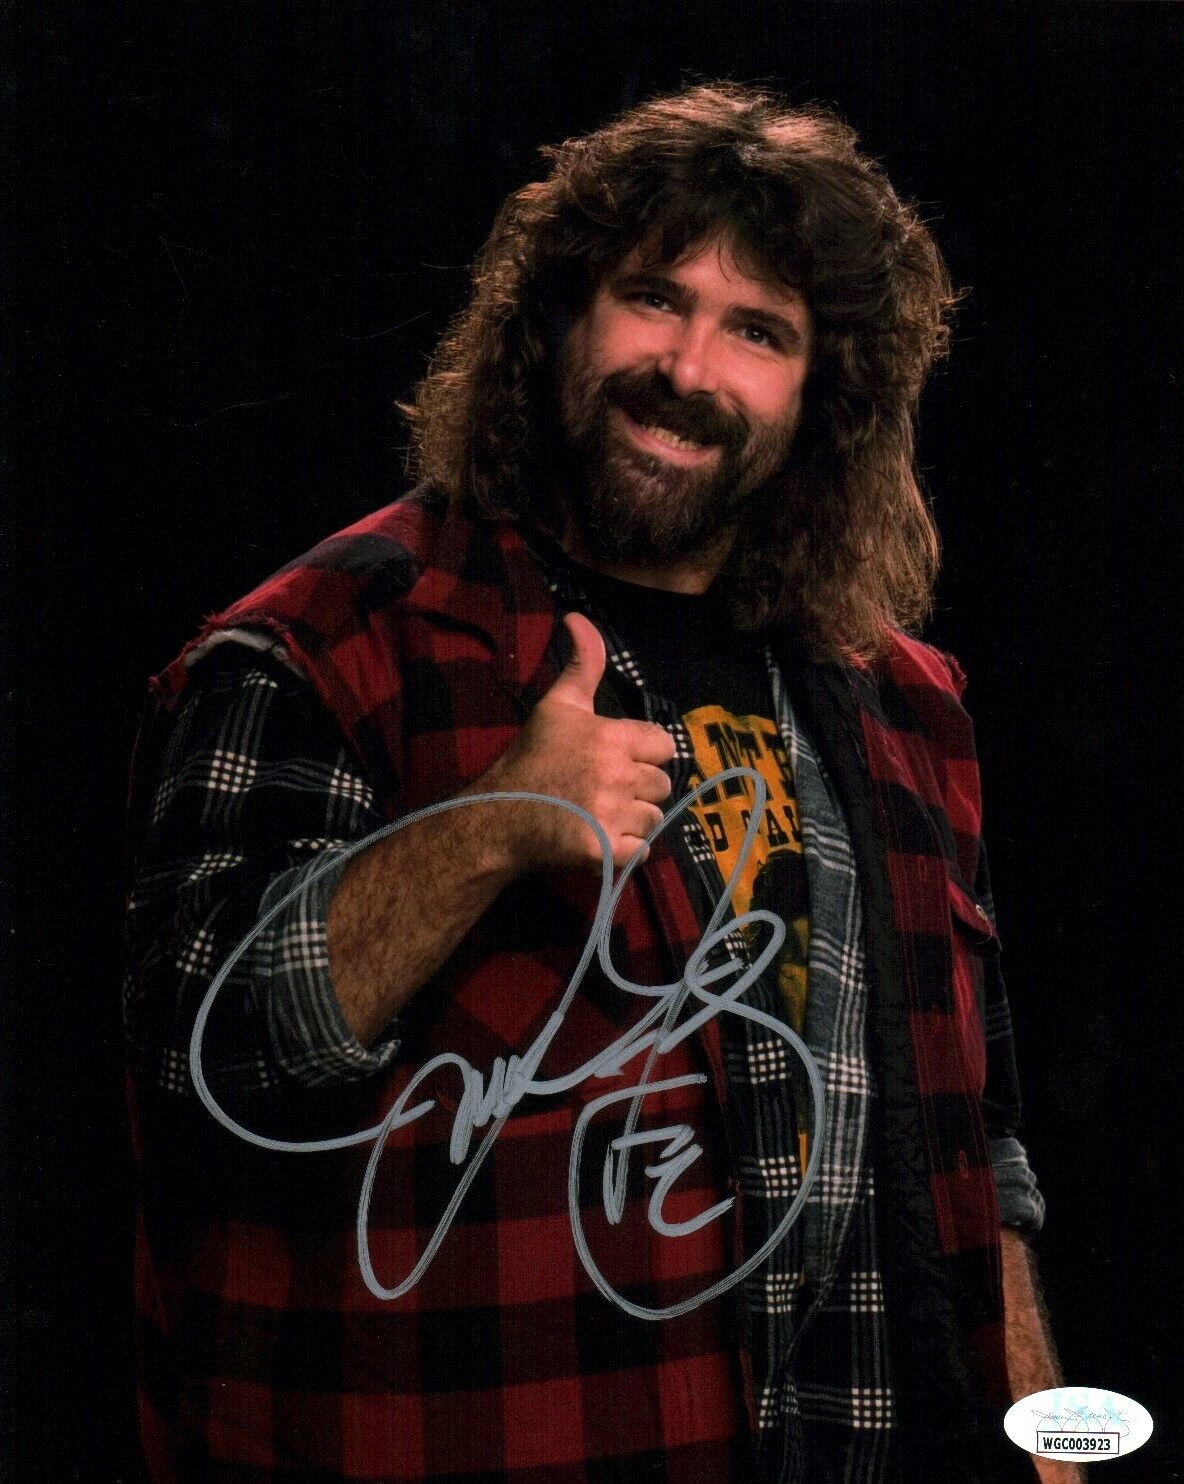 Mick Foley WWE Wrestling 8x10 Signed Photo Poster JSA COA Certified Autograph